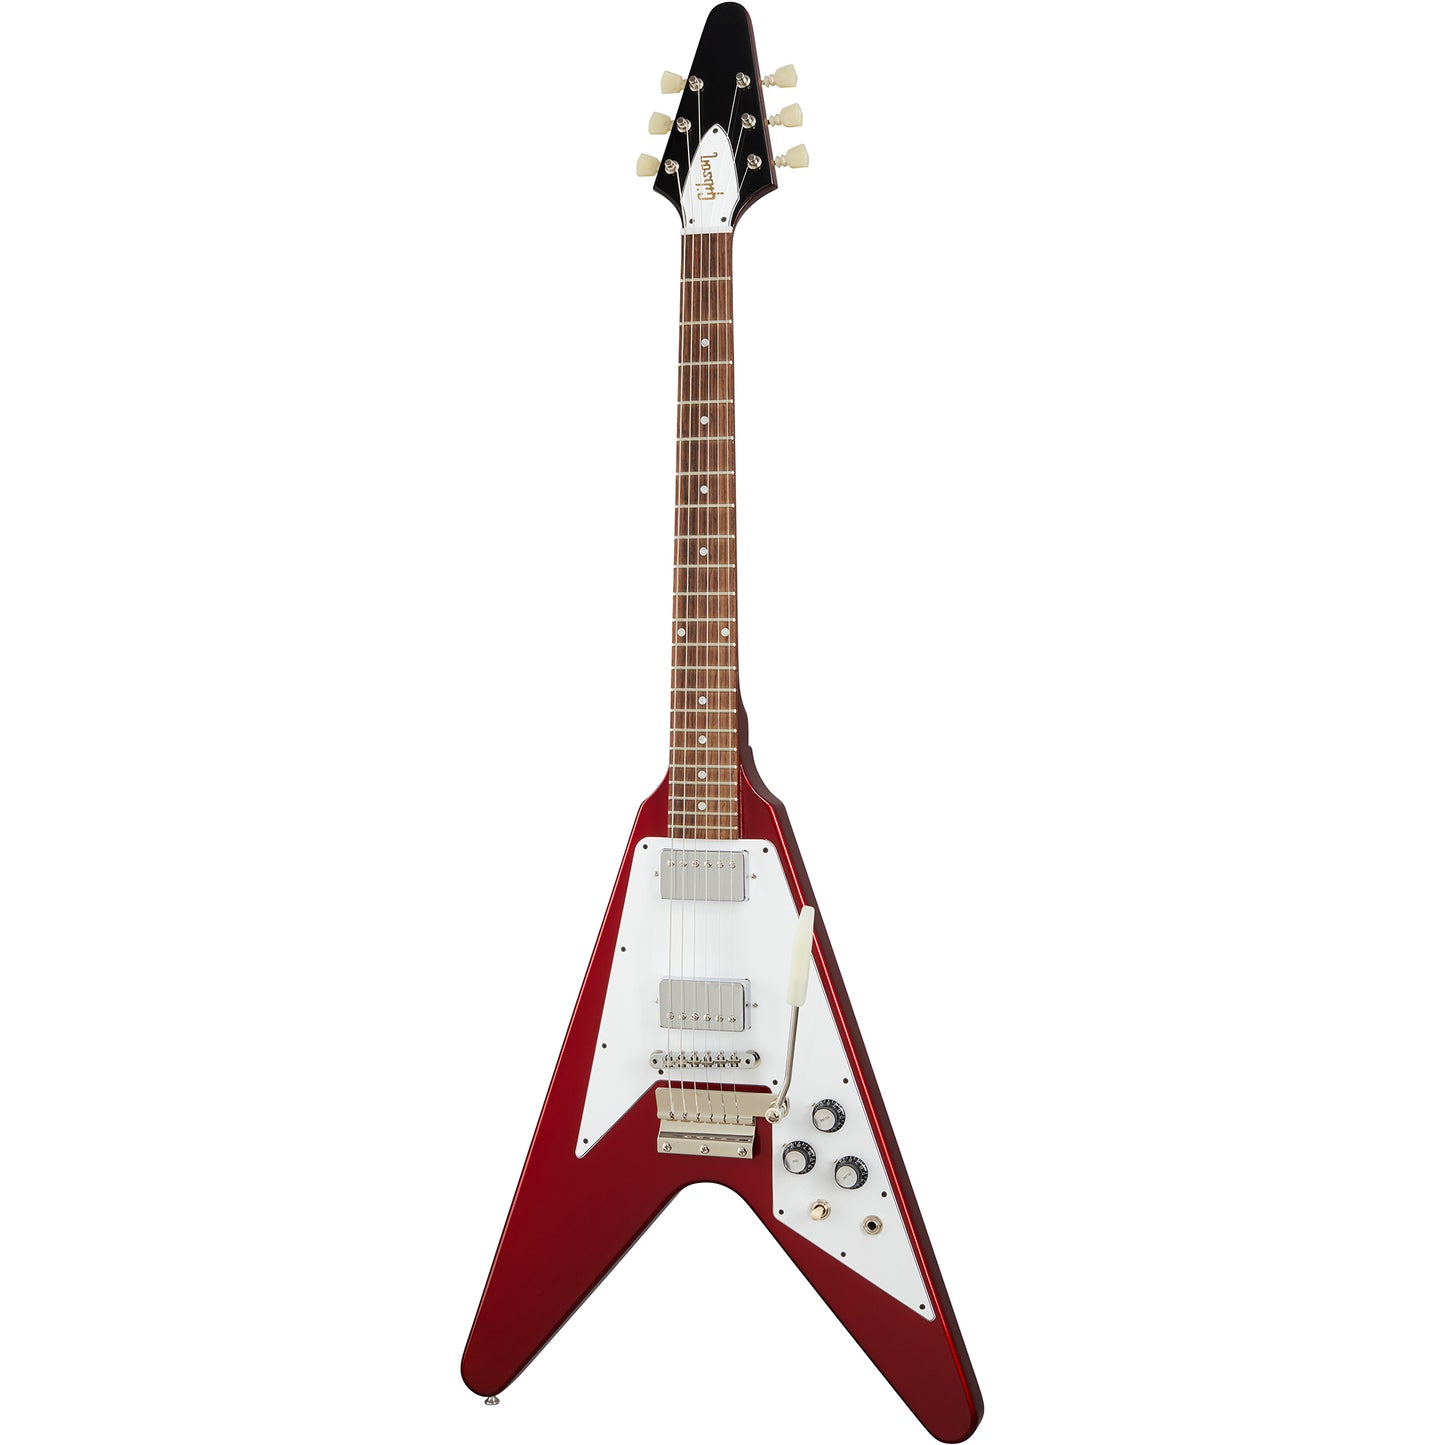 Gibson Custom Shop ‘67 Flying V Reissue Electric Guitar in Sparkling Burgundy